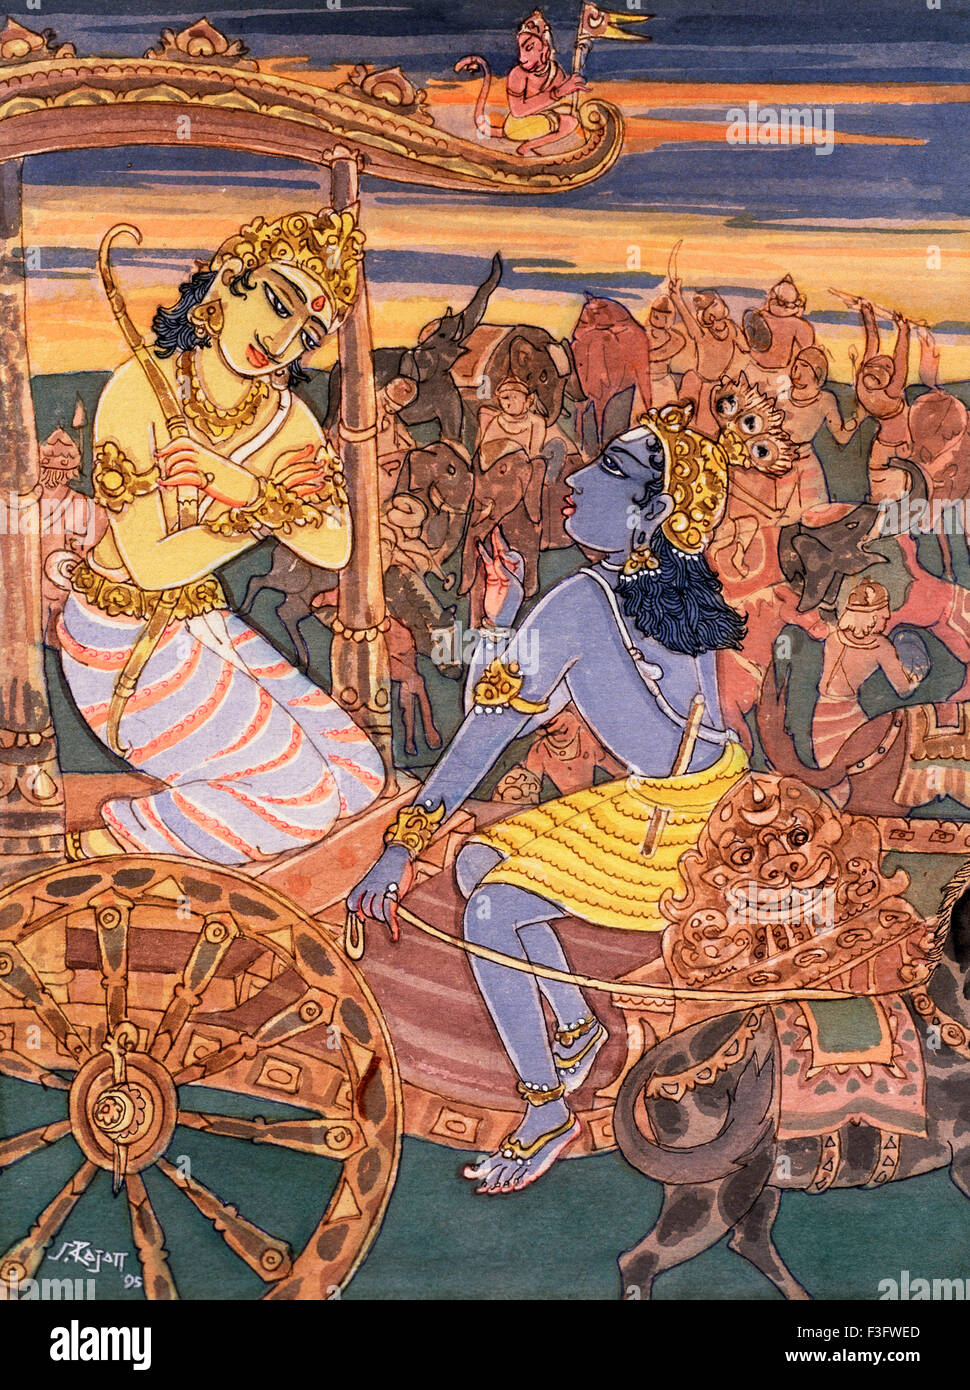 Hinduism hindu art religion spirituality krishna arjuna bow arrow bhagavat gita chariot war Stock Photo